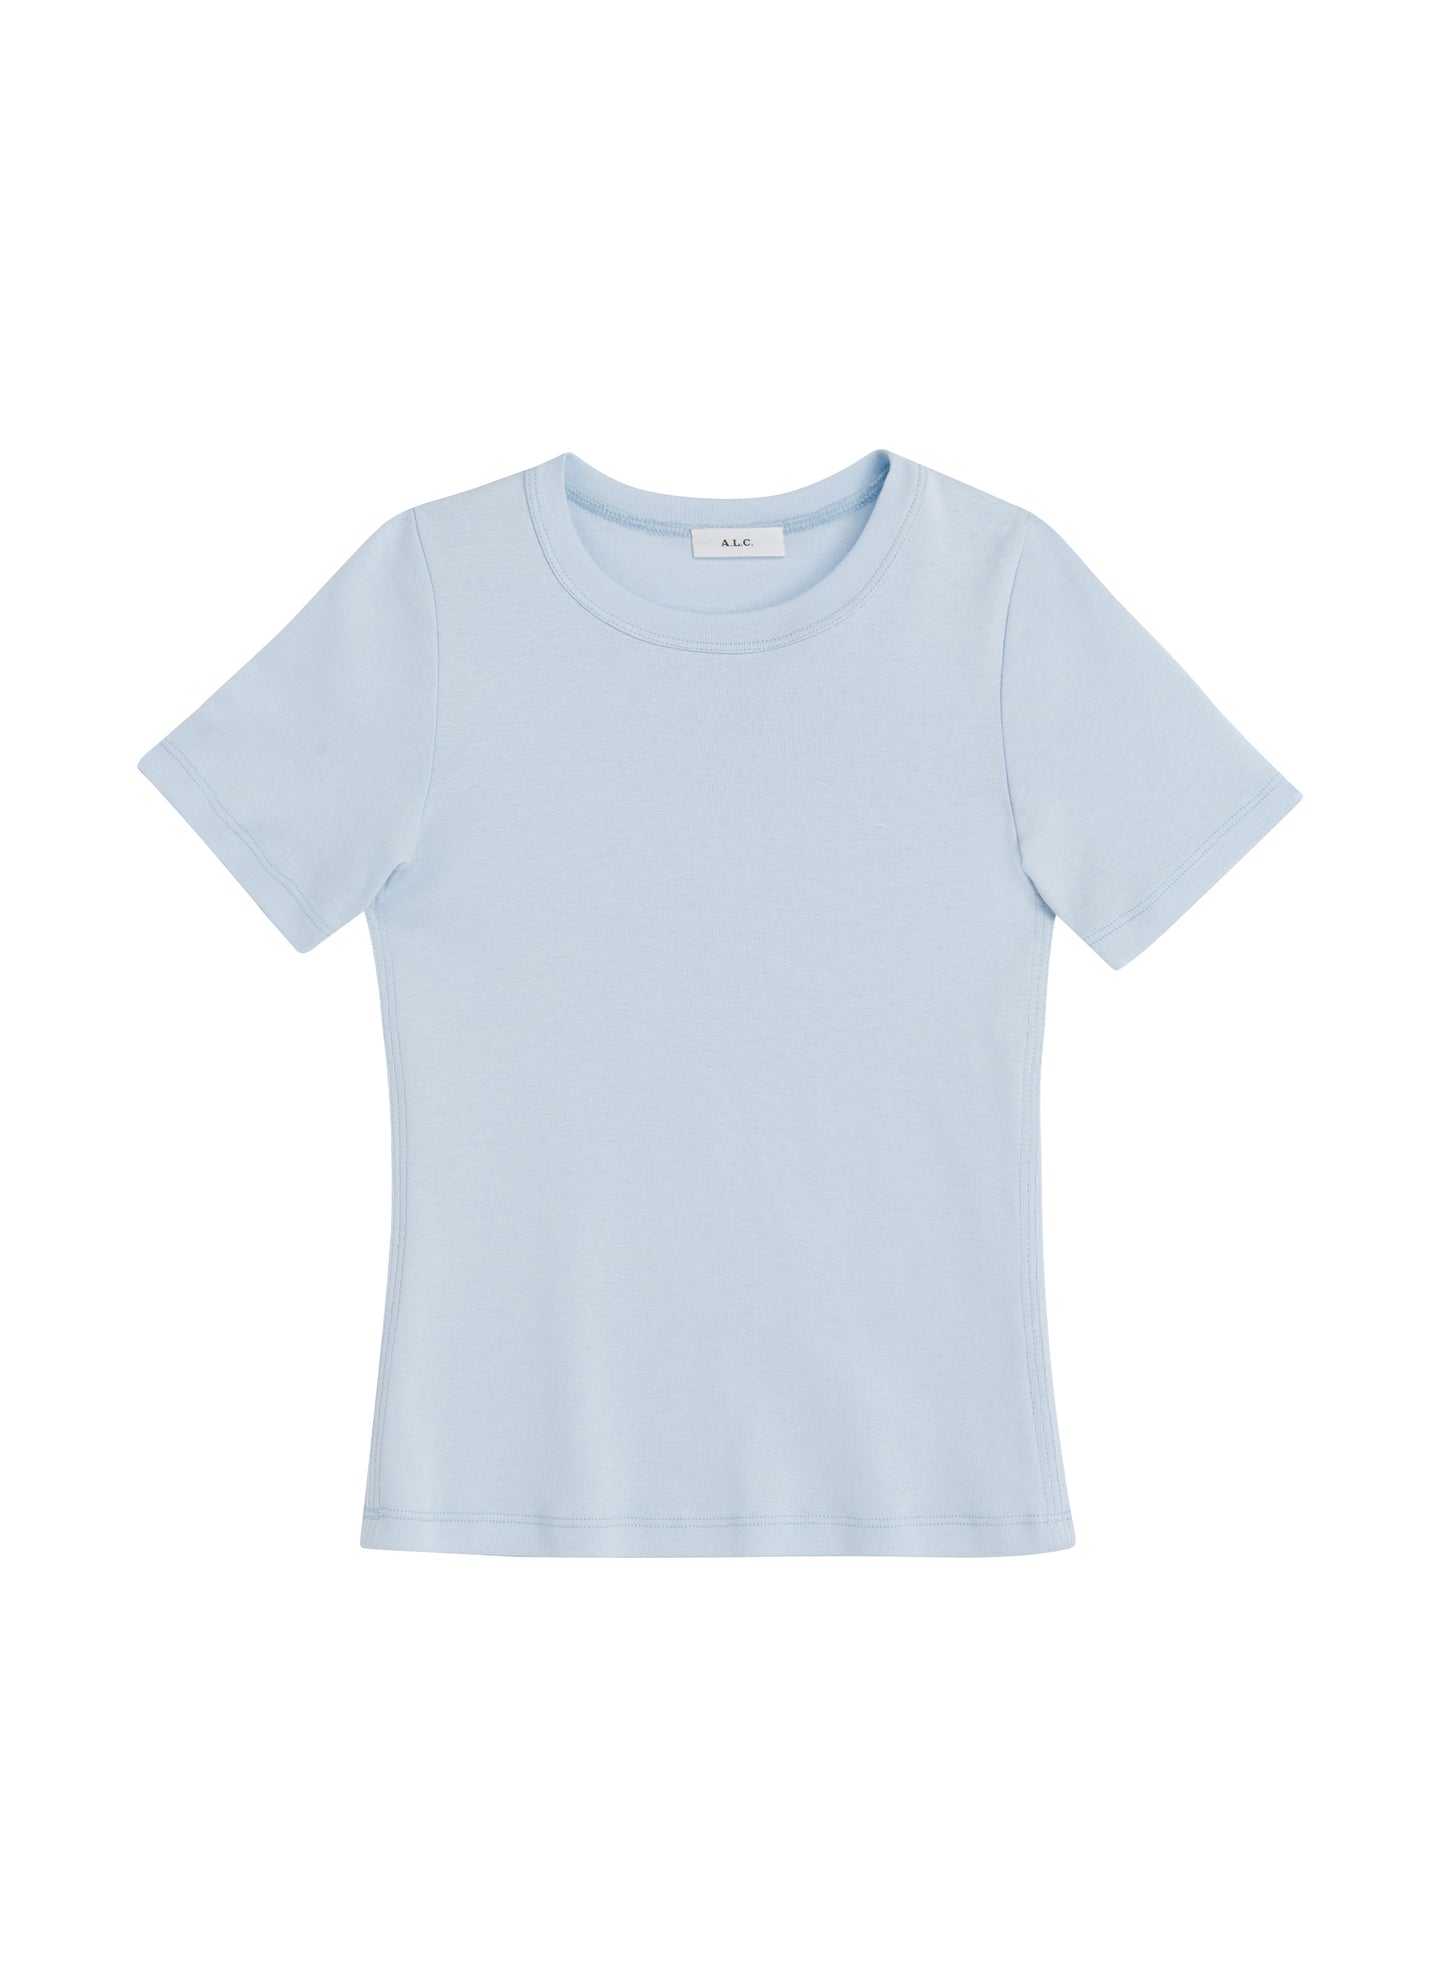 flatlay of light blue tshirt